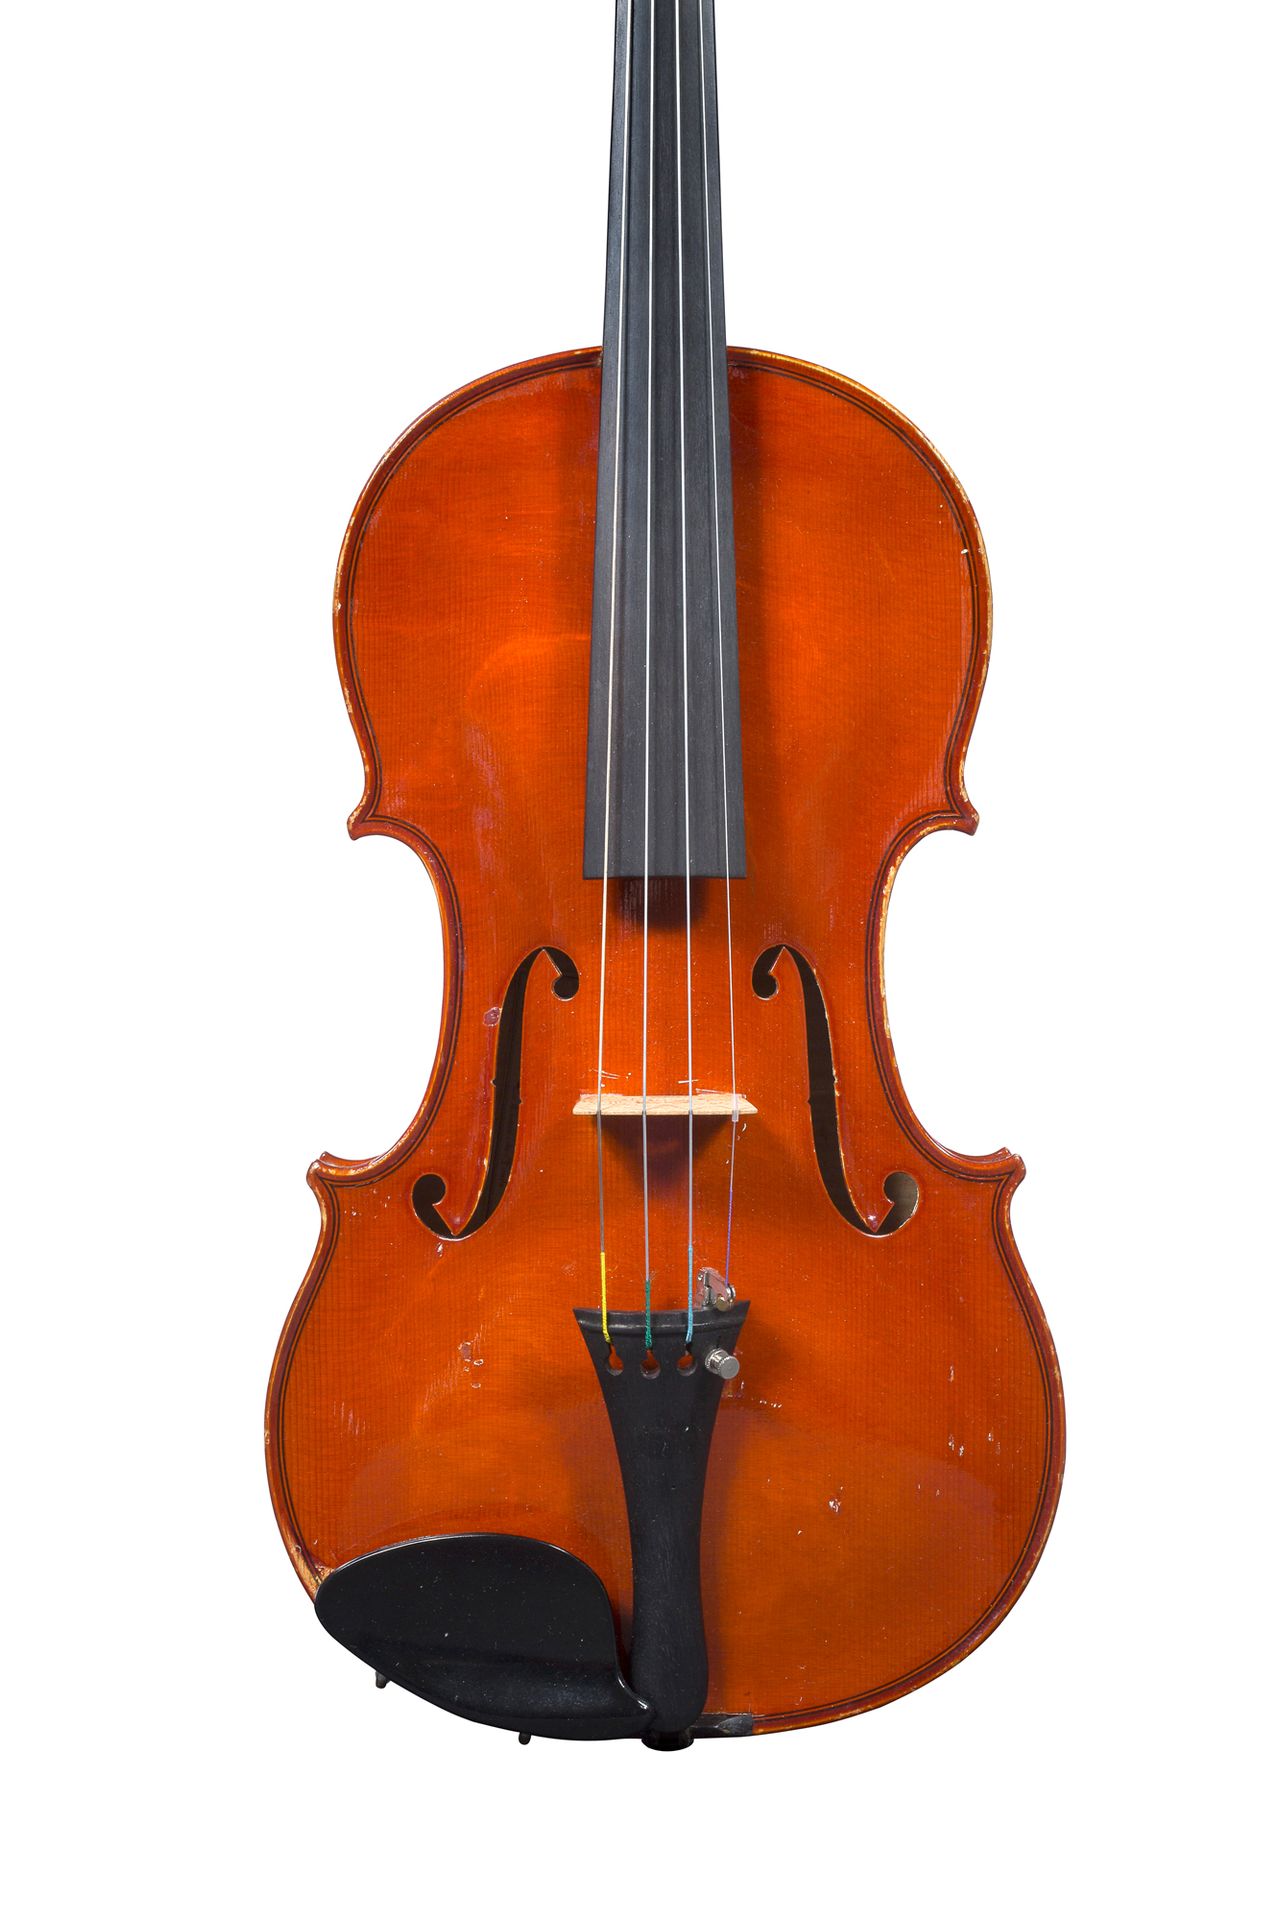 Null Violín de Siegfried Petzold
Fabricado en La Chaux-De-Fonds en 1930
Con etiq&hellip;